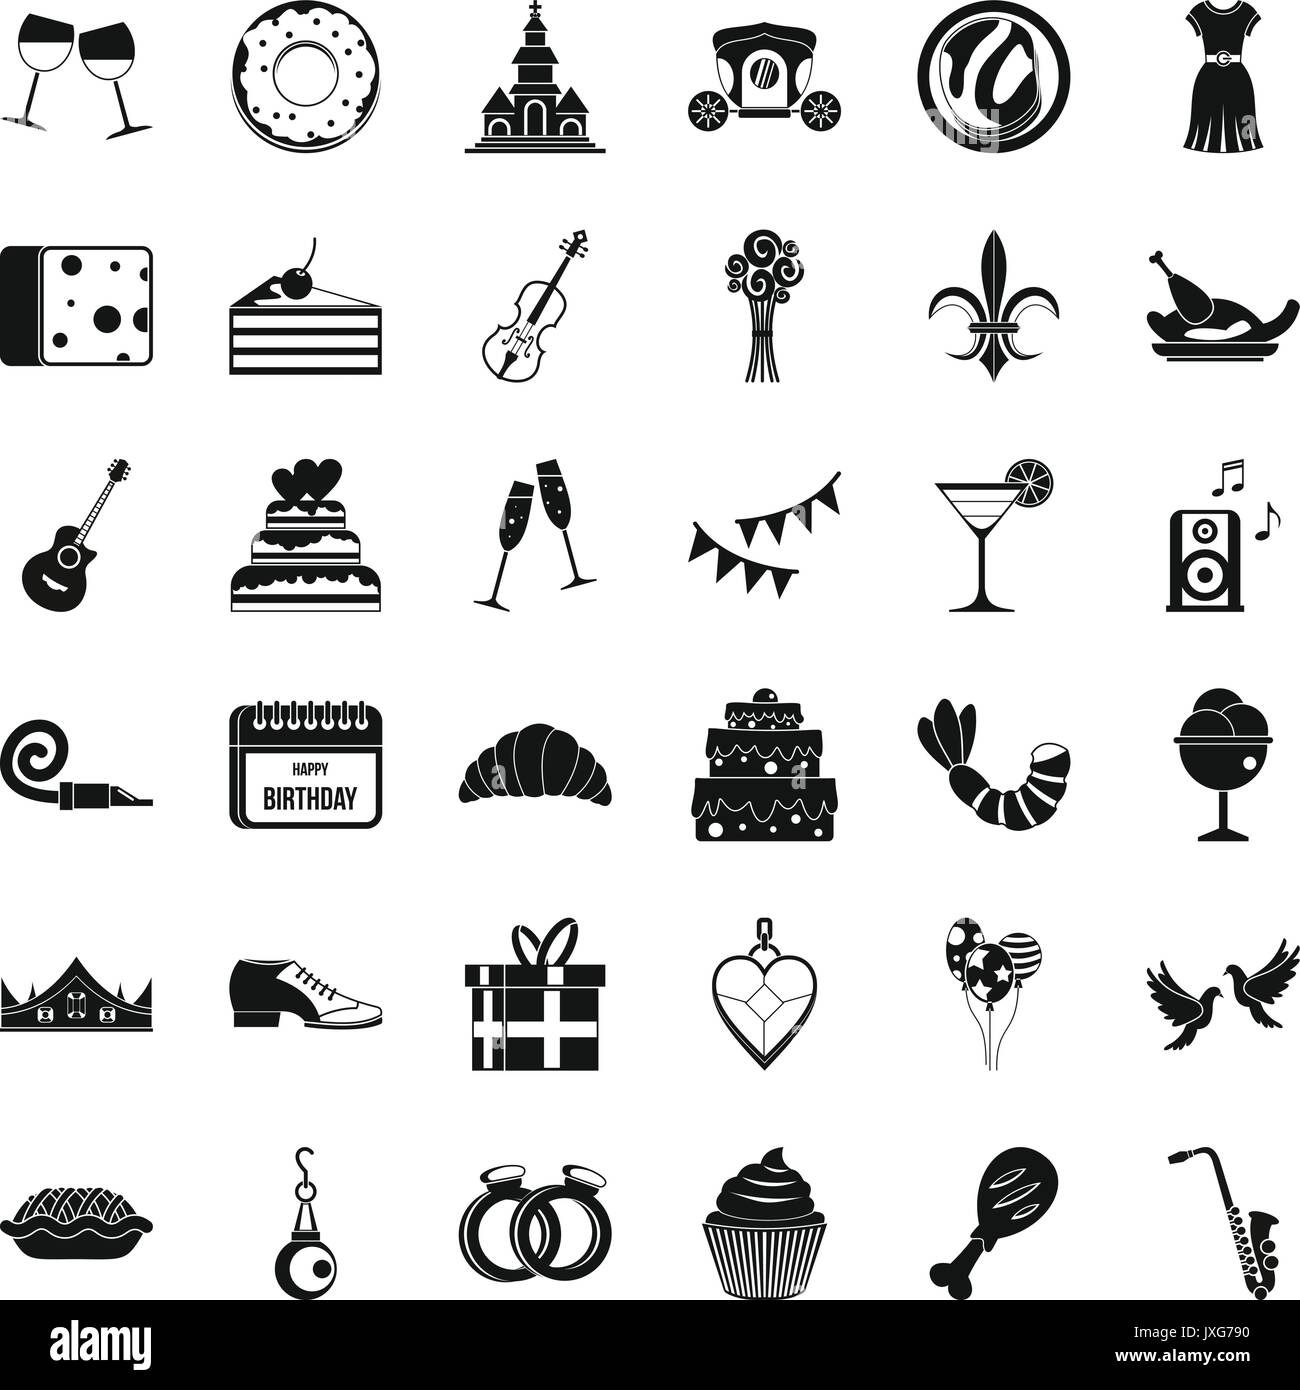 Icons set banquet, le style simple Image Vectorielle Stock - Alamy